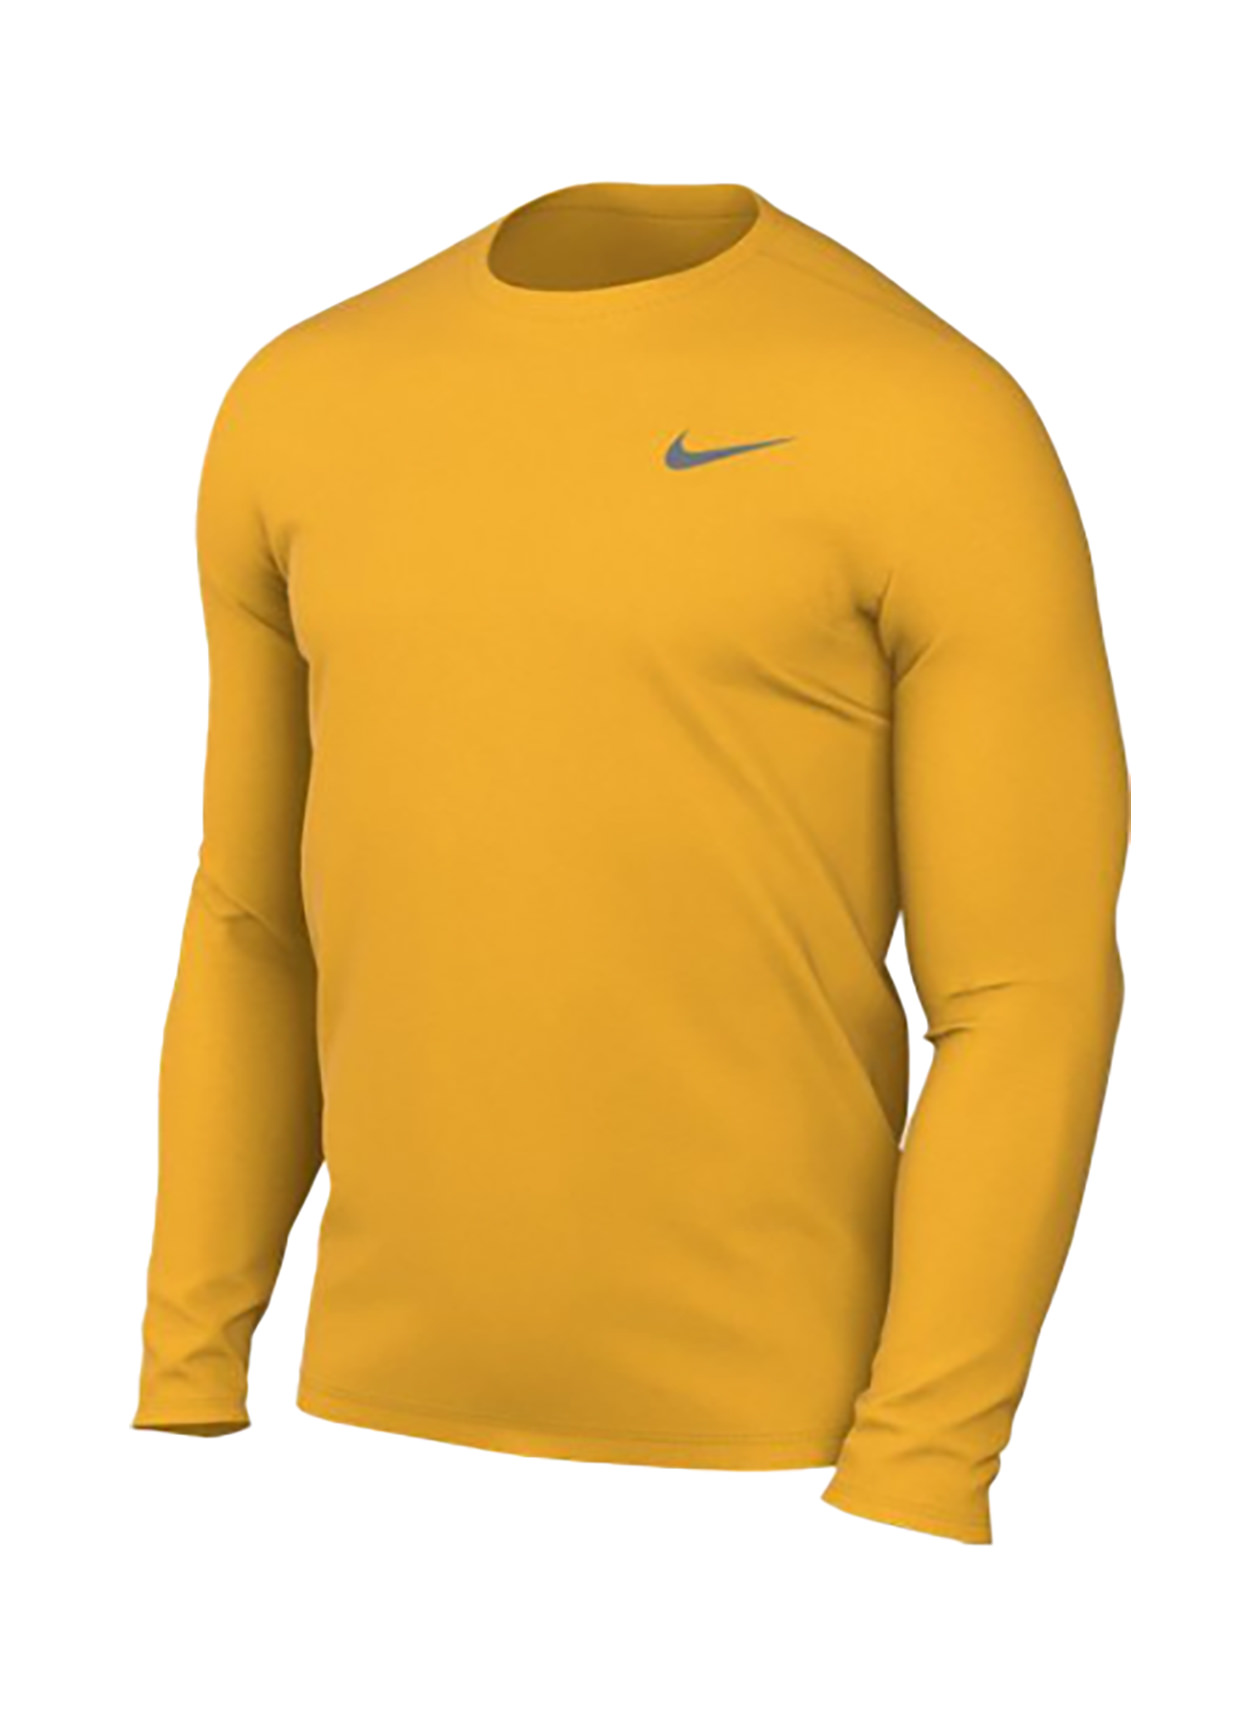 yellow long sleeve shirt nike, Off 72%